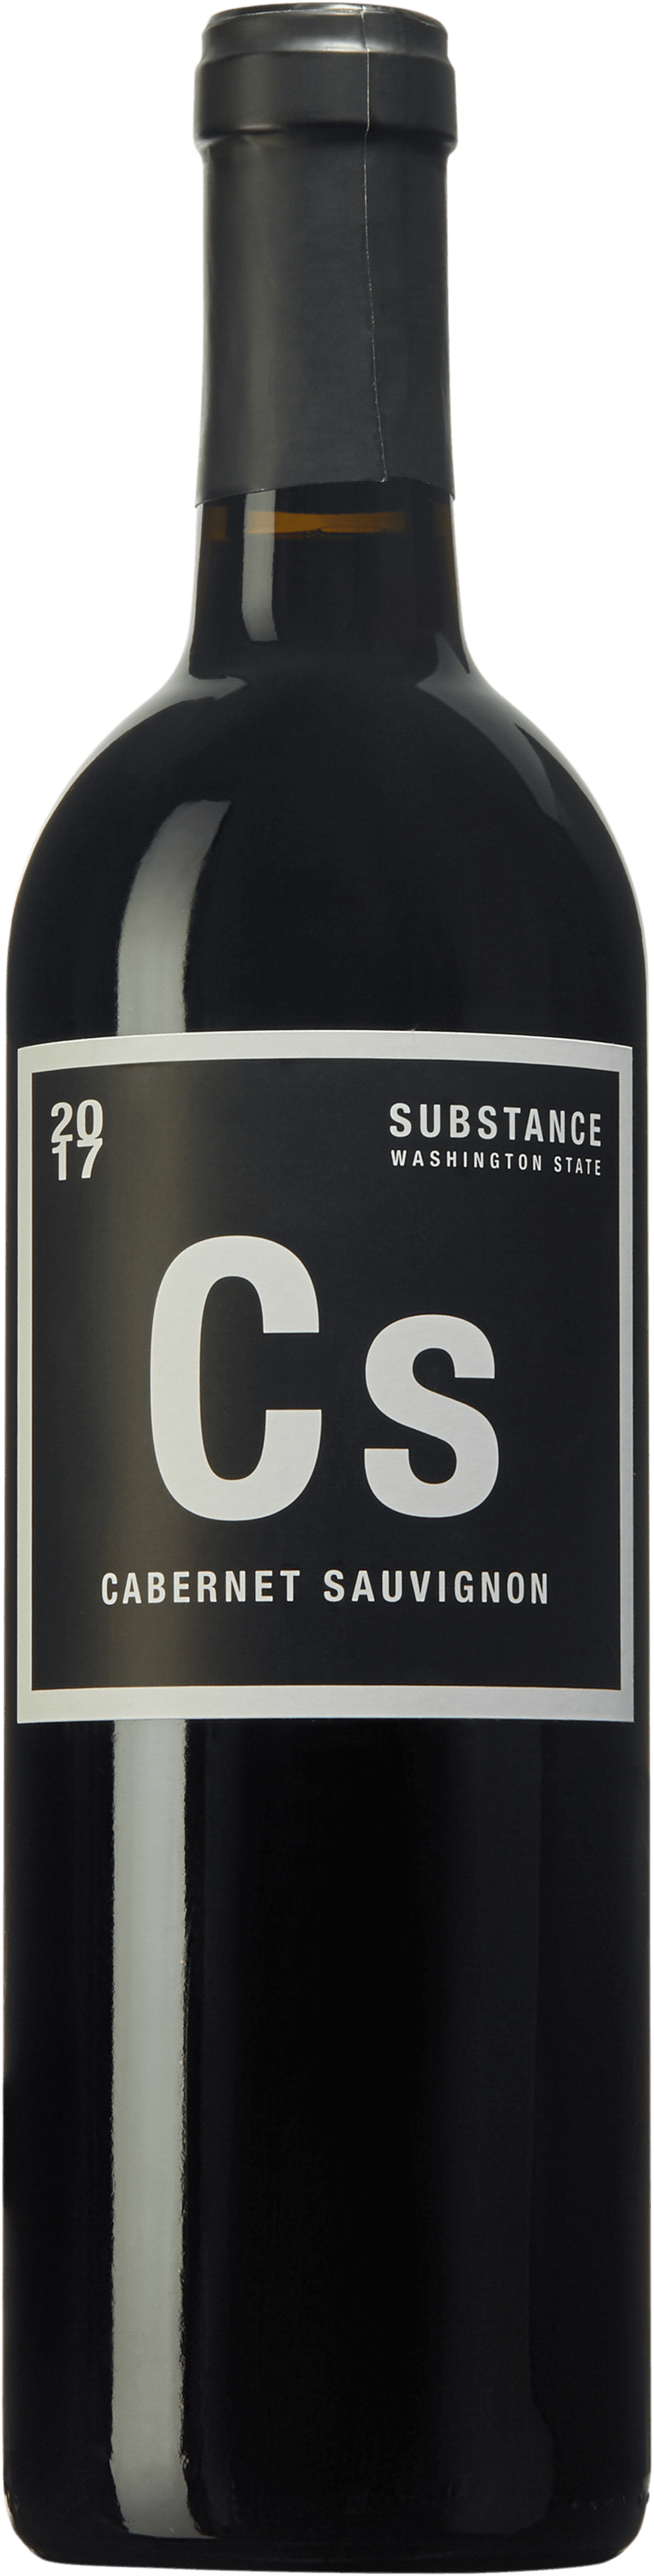 Wine Table Substance cabernet sauvignon USA